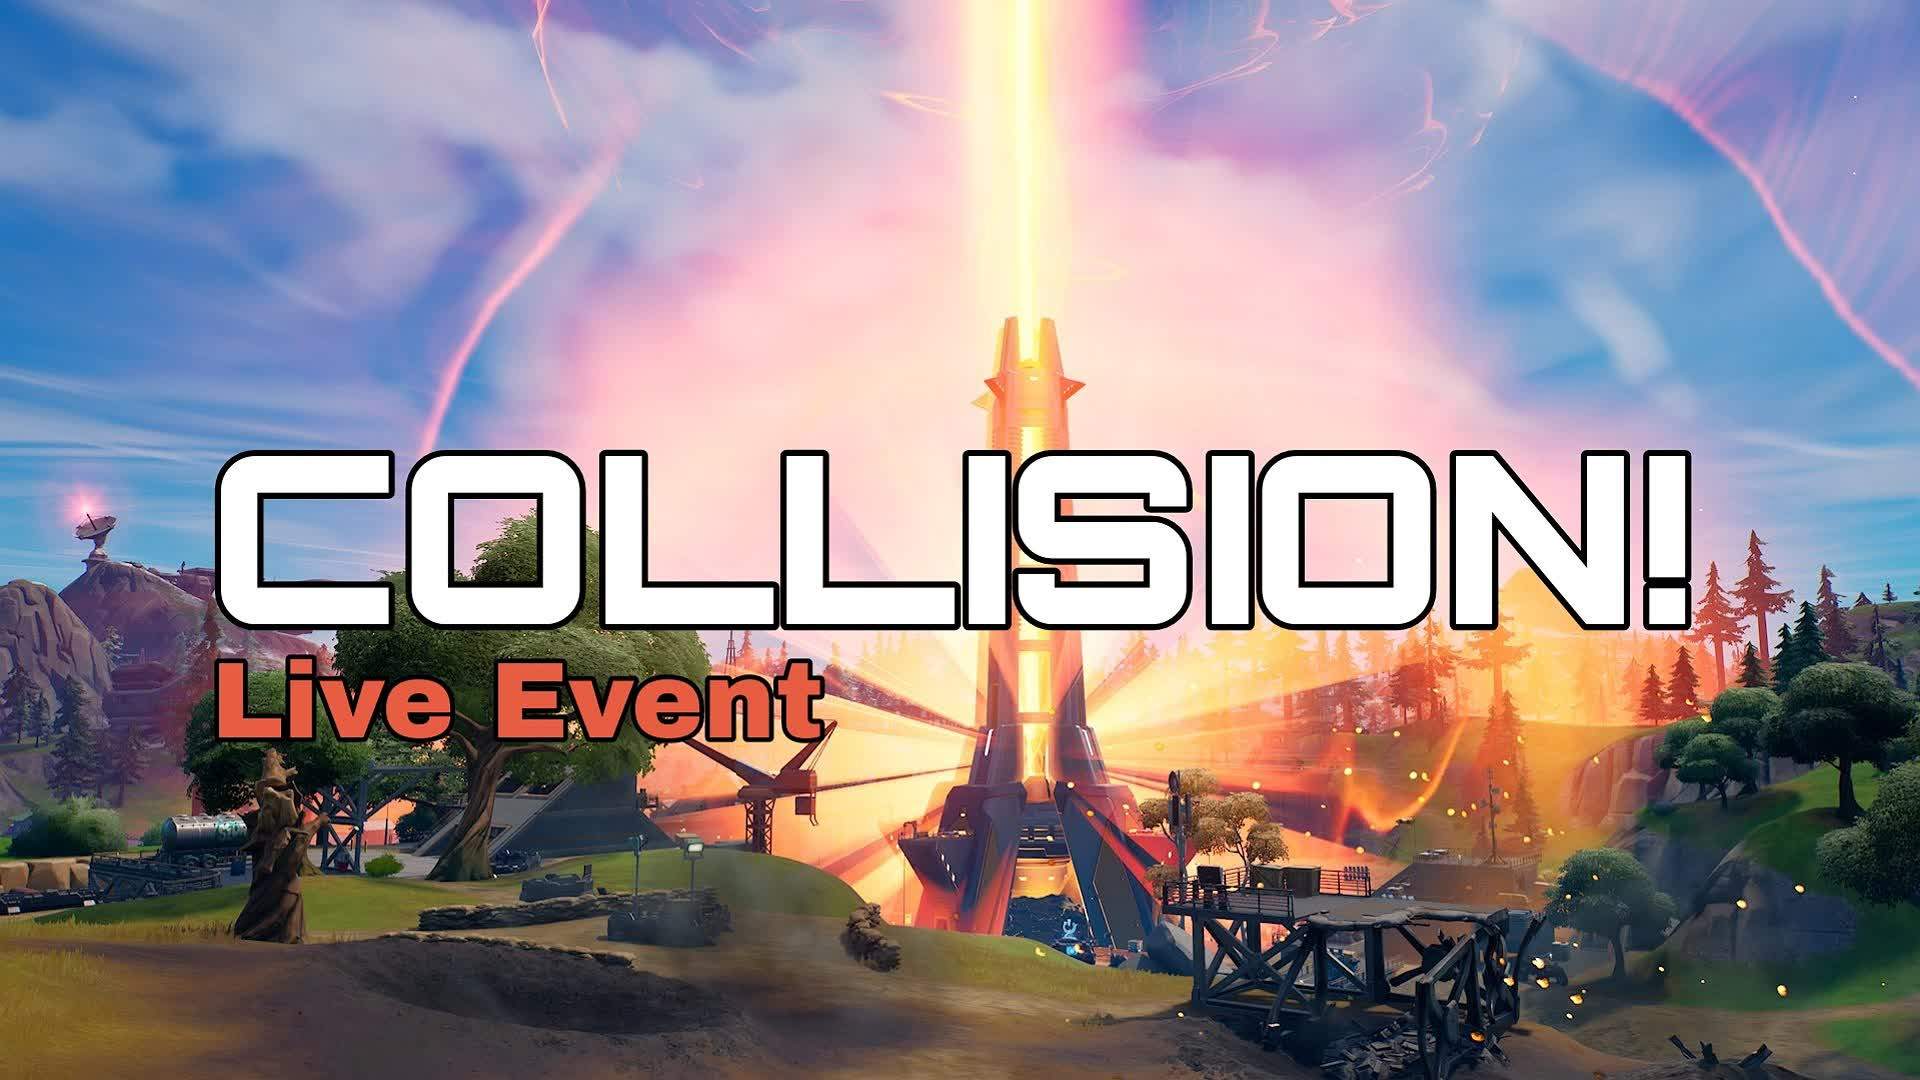 COLLISION! - LIVE EVENT